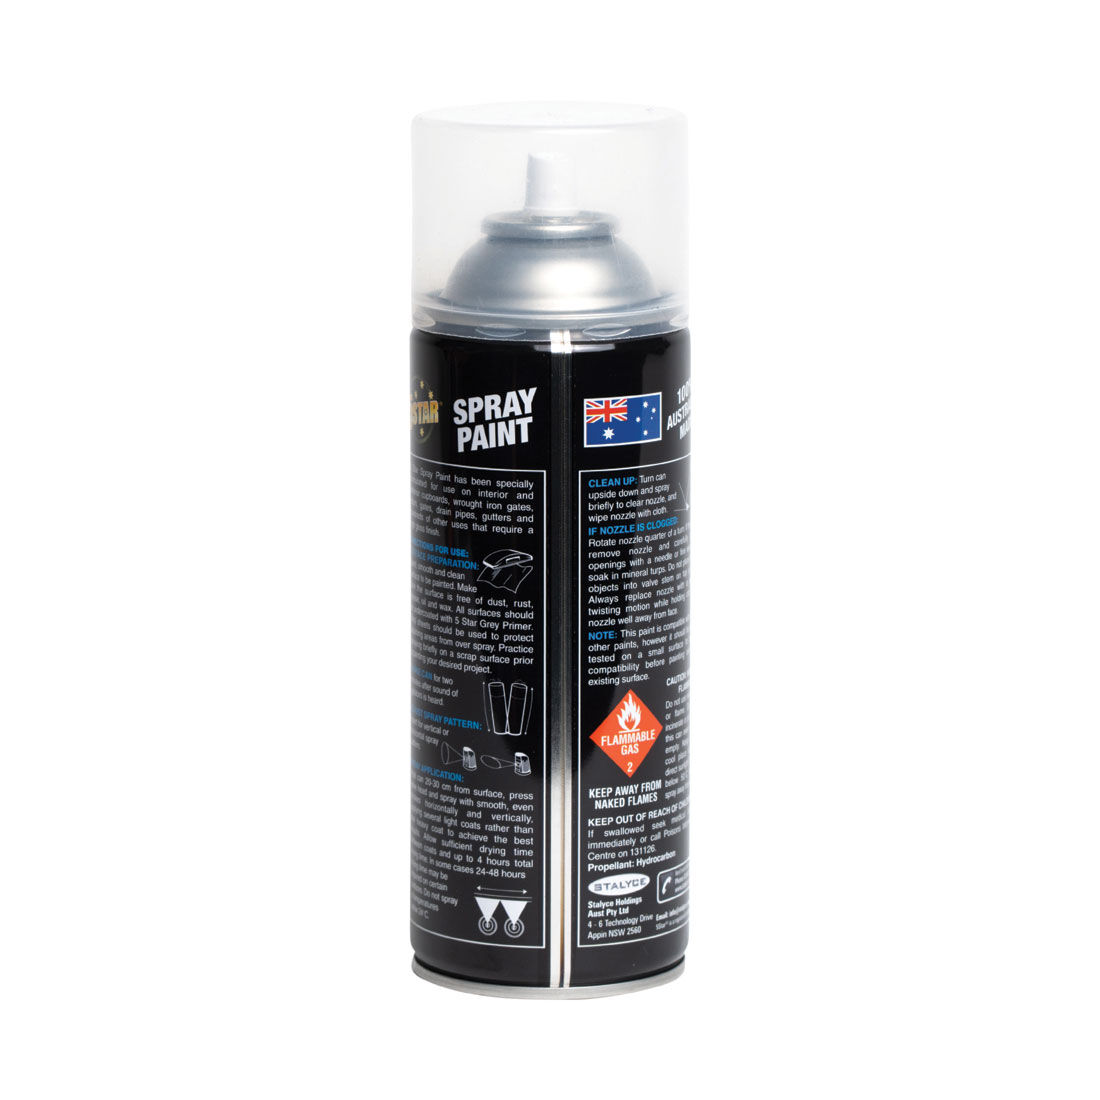 5 Star Enamel Spray Paint Clear 250g, , scaau_hi-res